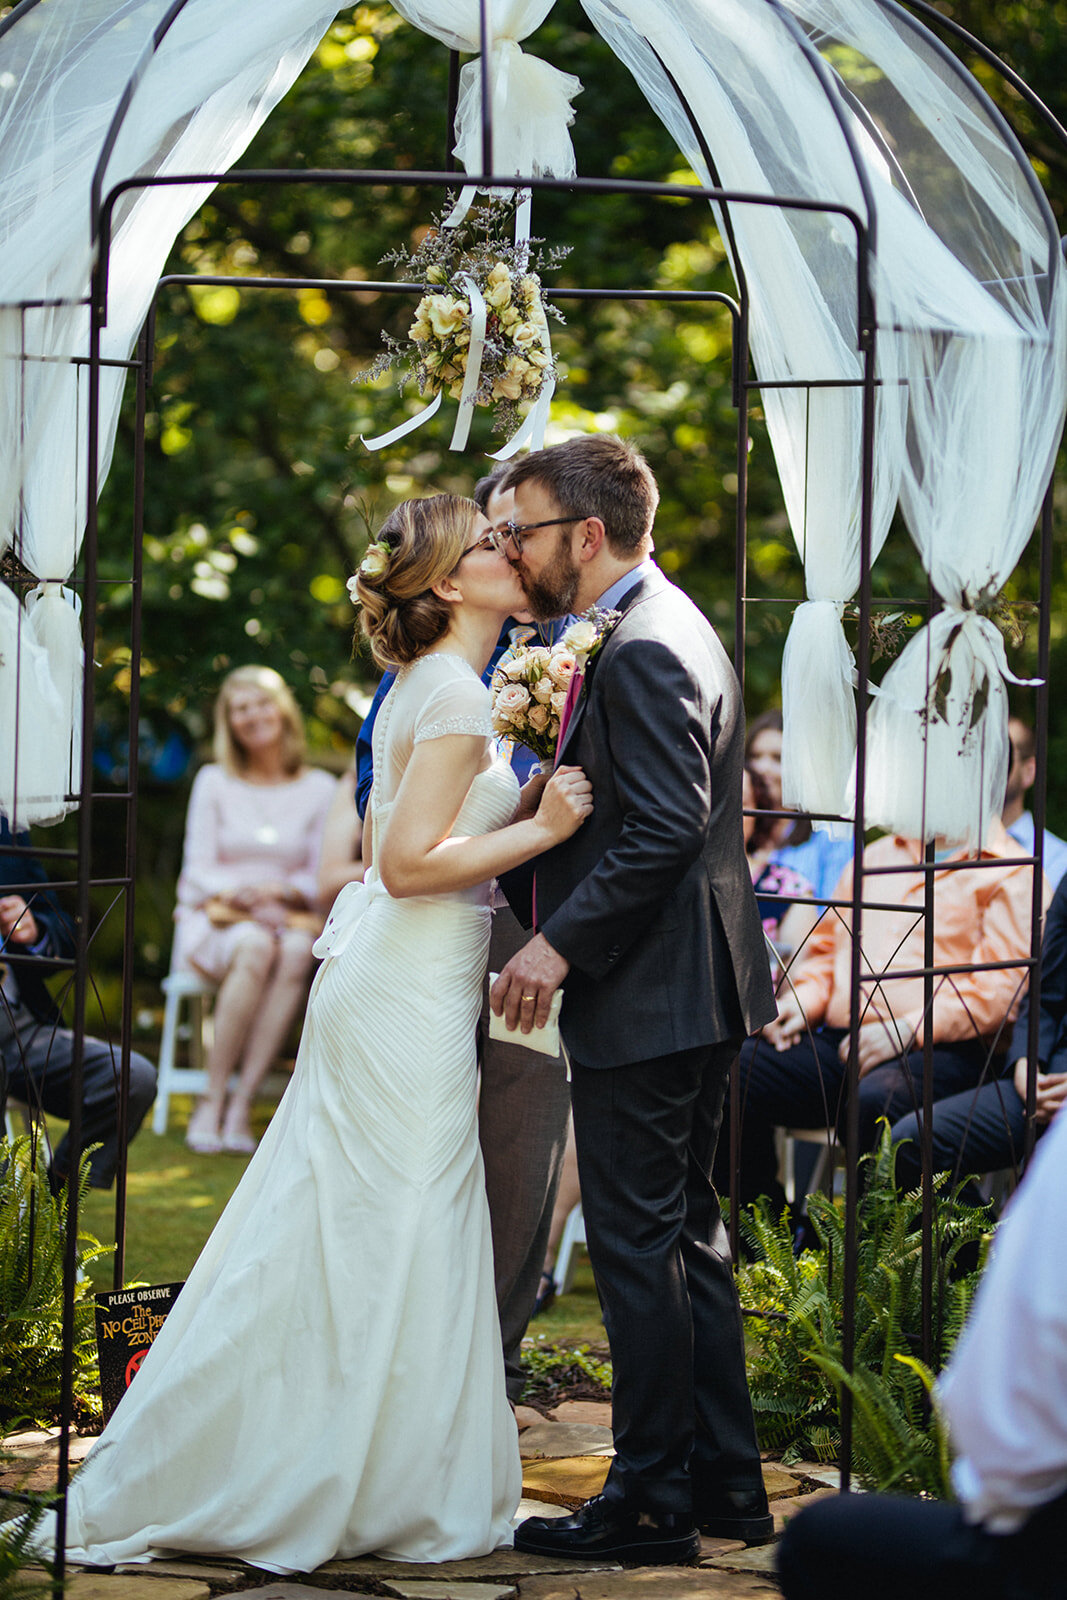 Newly married couple kissing at their wedding in Atlanta GA Shawnee Custalow Queer Wedding Photographer